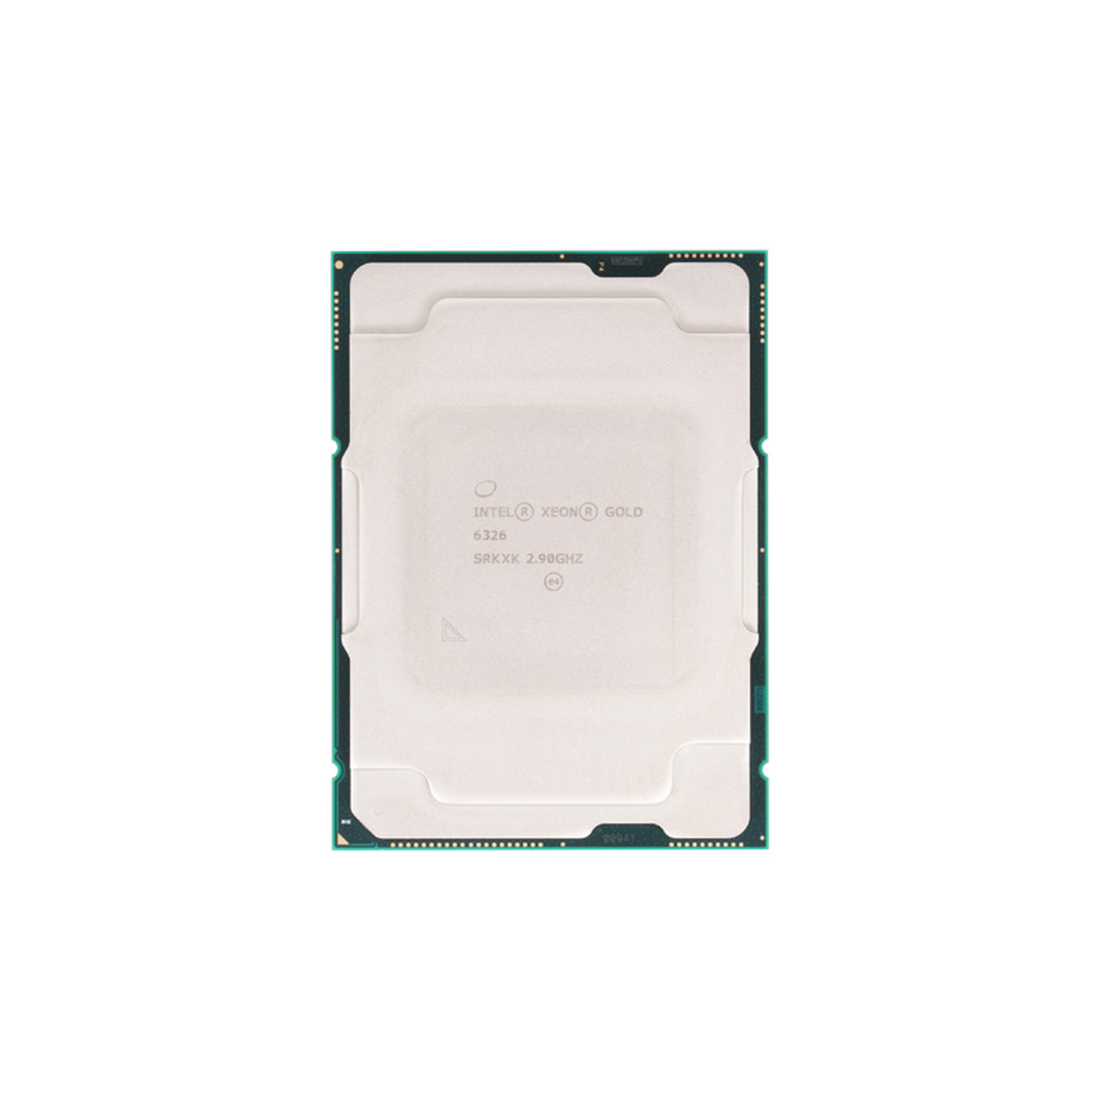 Центральный процессор (CPU), Intel, Xeon Gold Processor 6326, OEM, LGA4189, Ice Lake, 16/32 Core/thread, 2.90 GHz, 24 MB, 185W